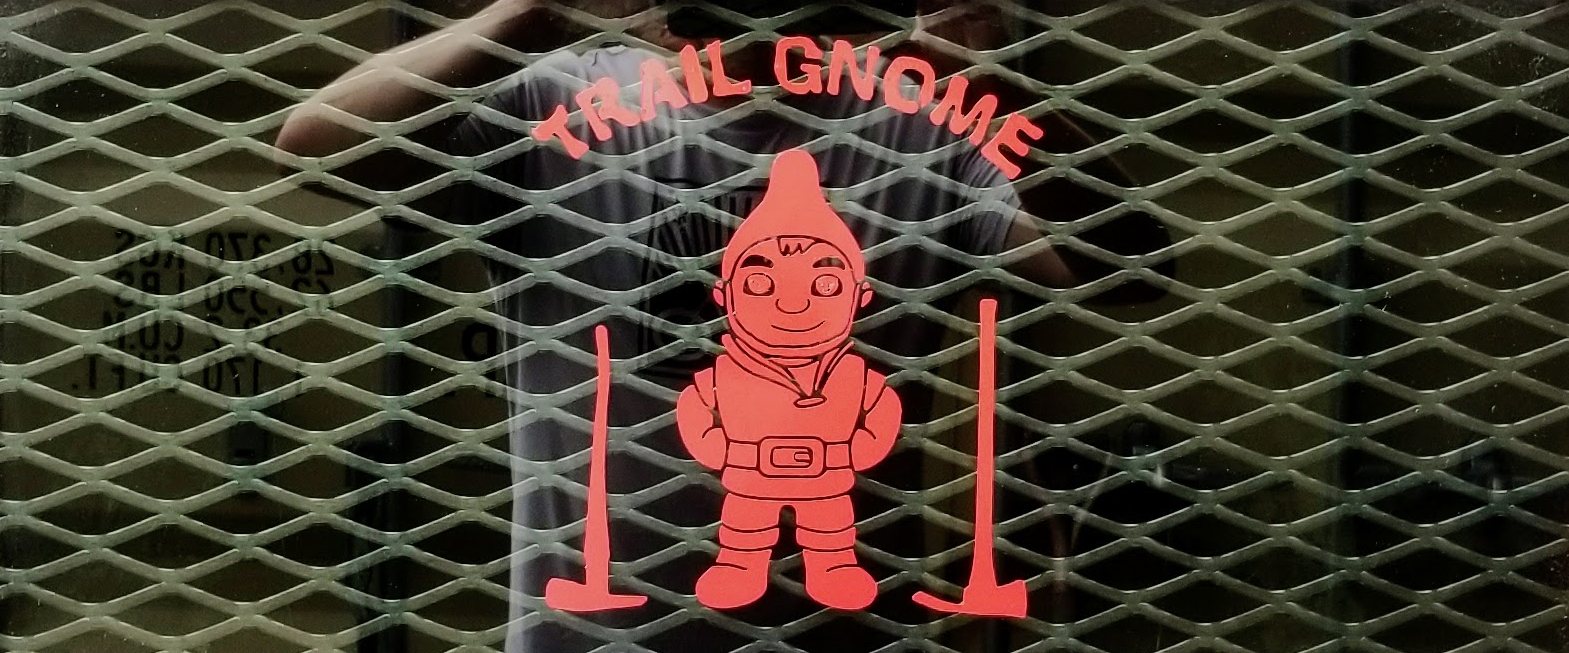 Trail Gnome sticker in back window of my truck